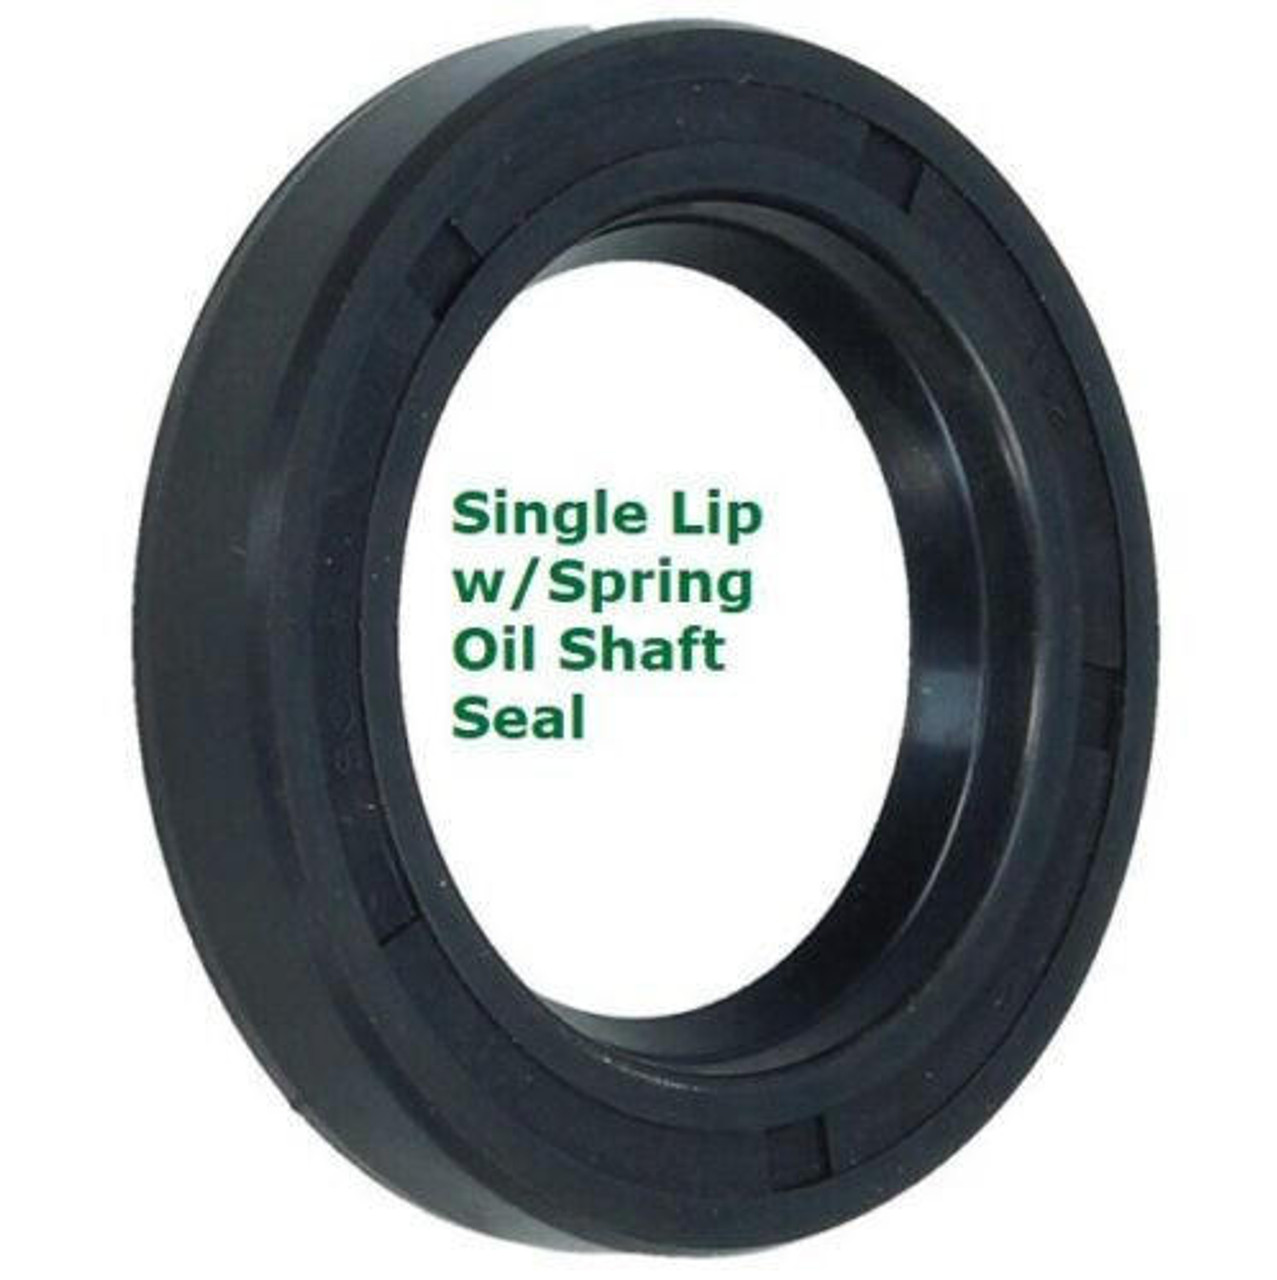 Metric Oil Shaft Seal 105 x 145 x 16mm   Single Lip   Price for 1 pc